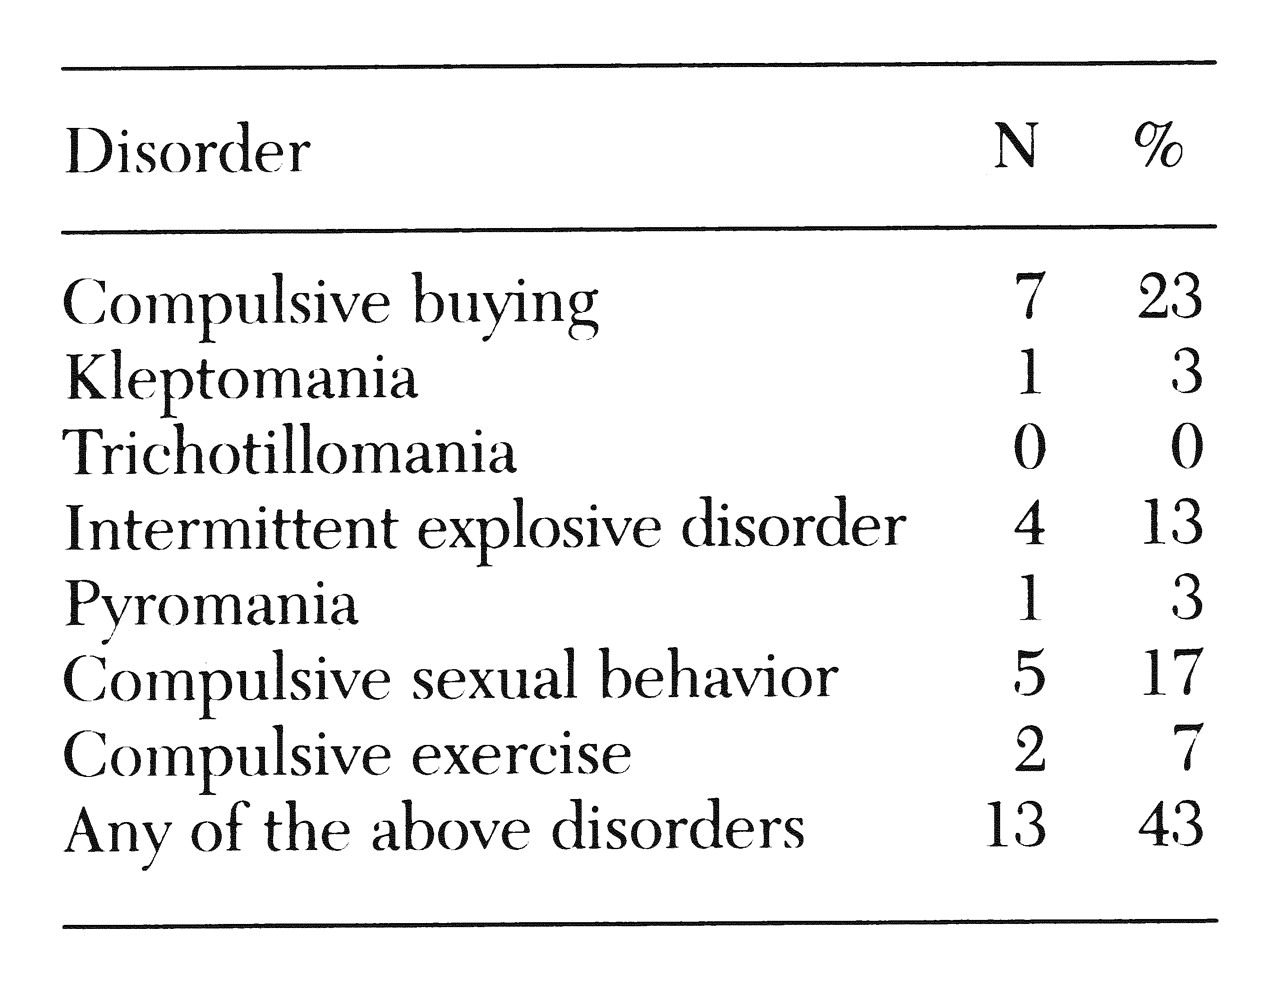 pathological behavior examples